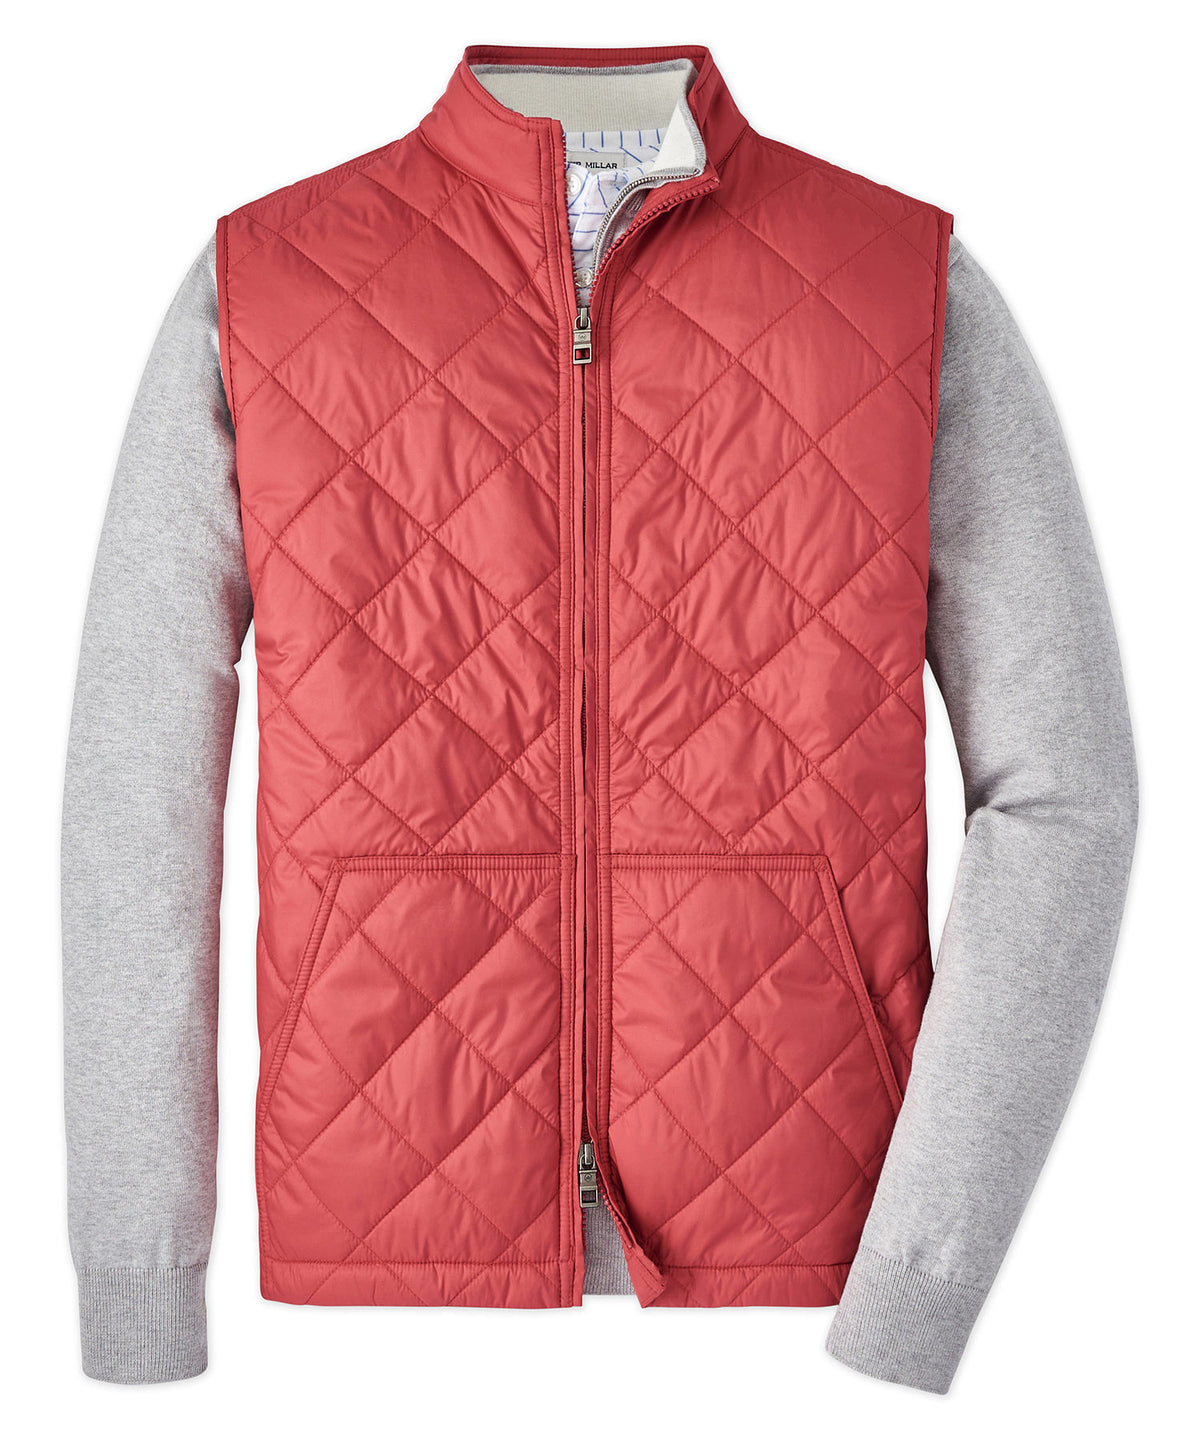 Peter Millar Bedford Outerwear Vest